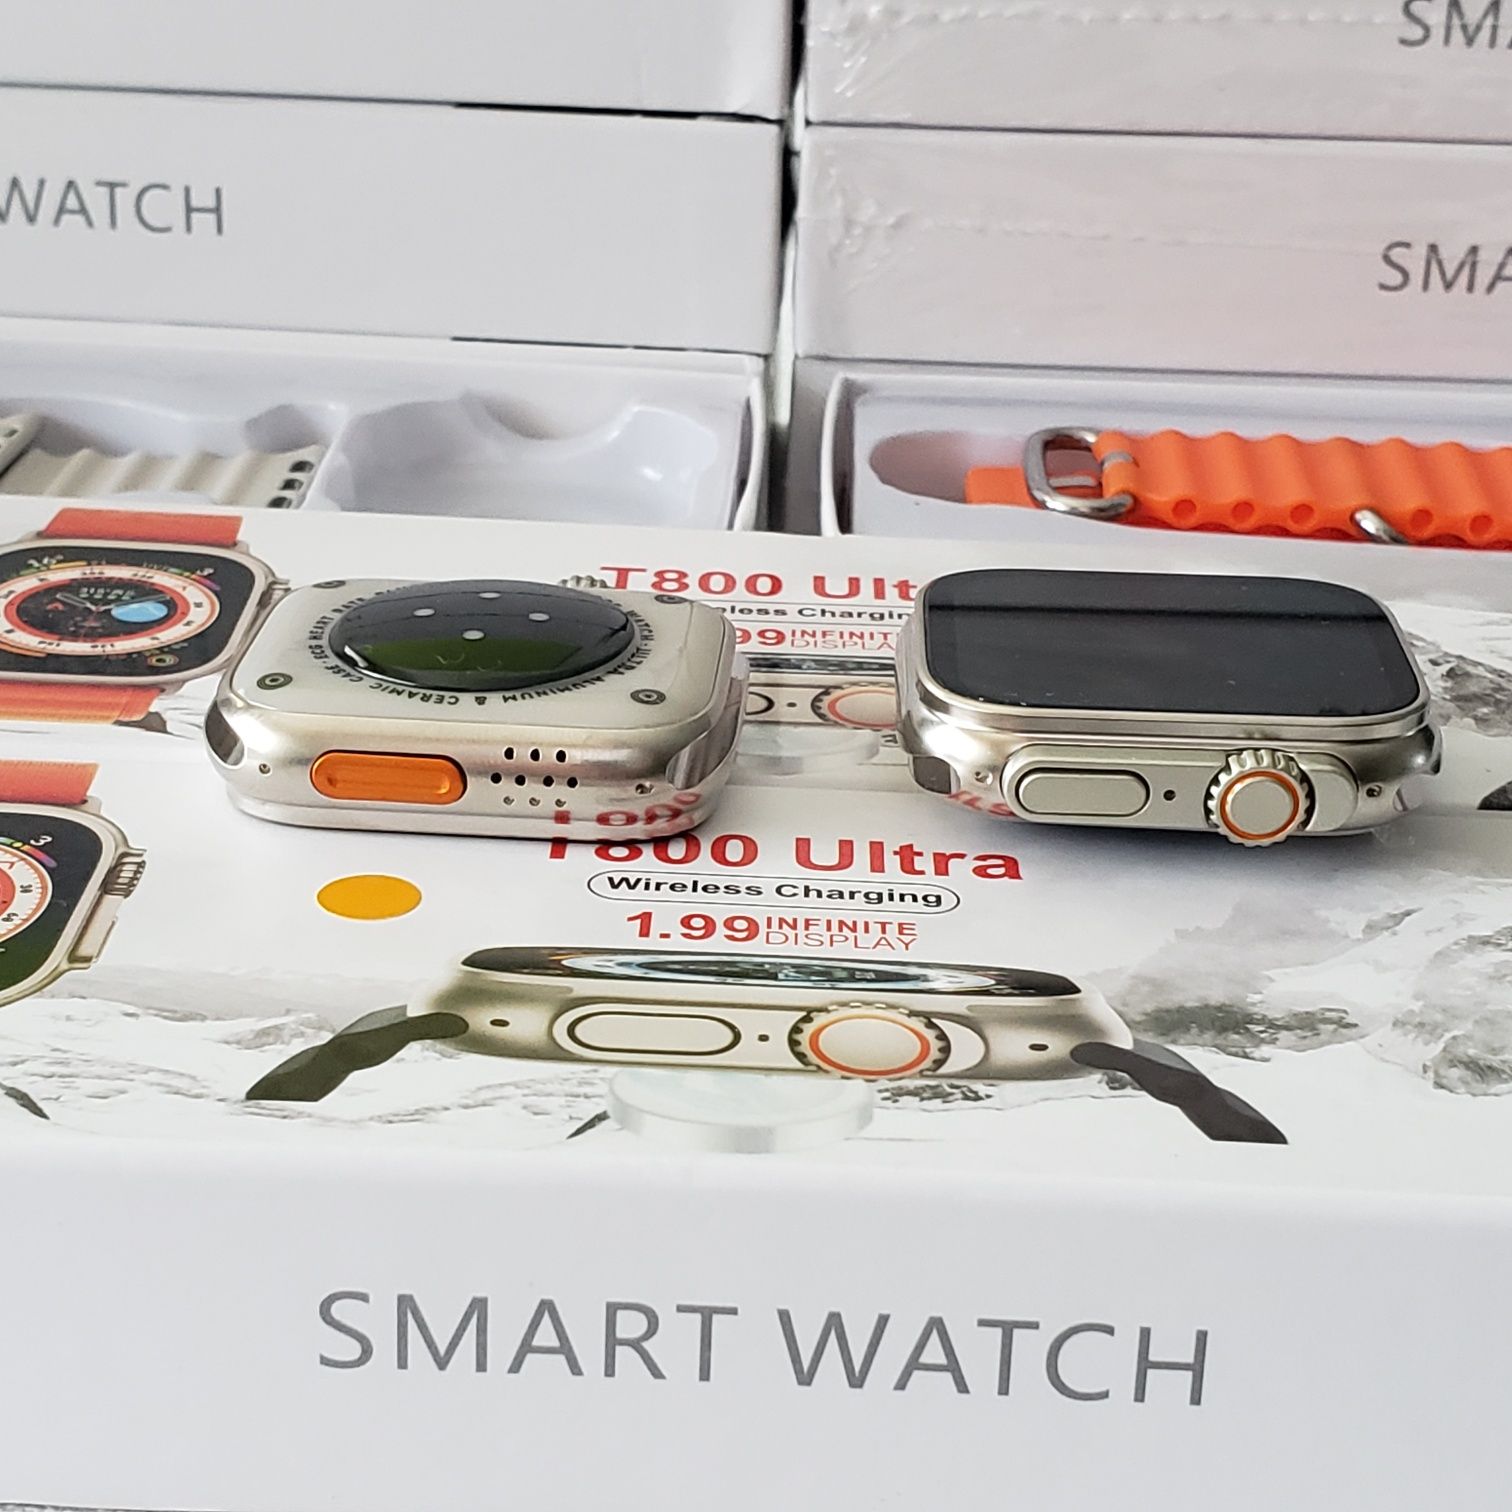 Smartwatch T800 Ultra Laranja